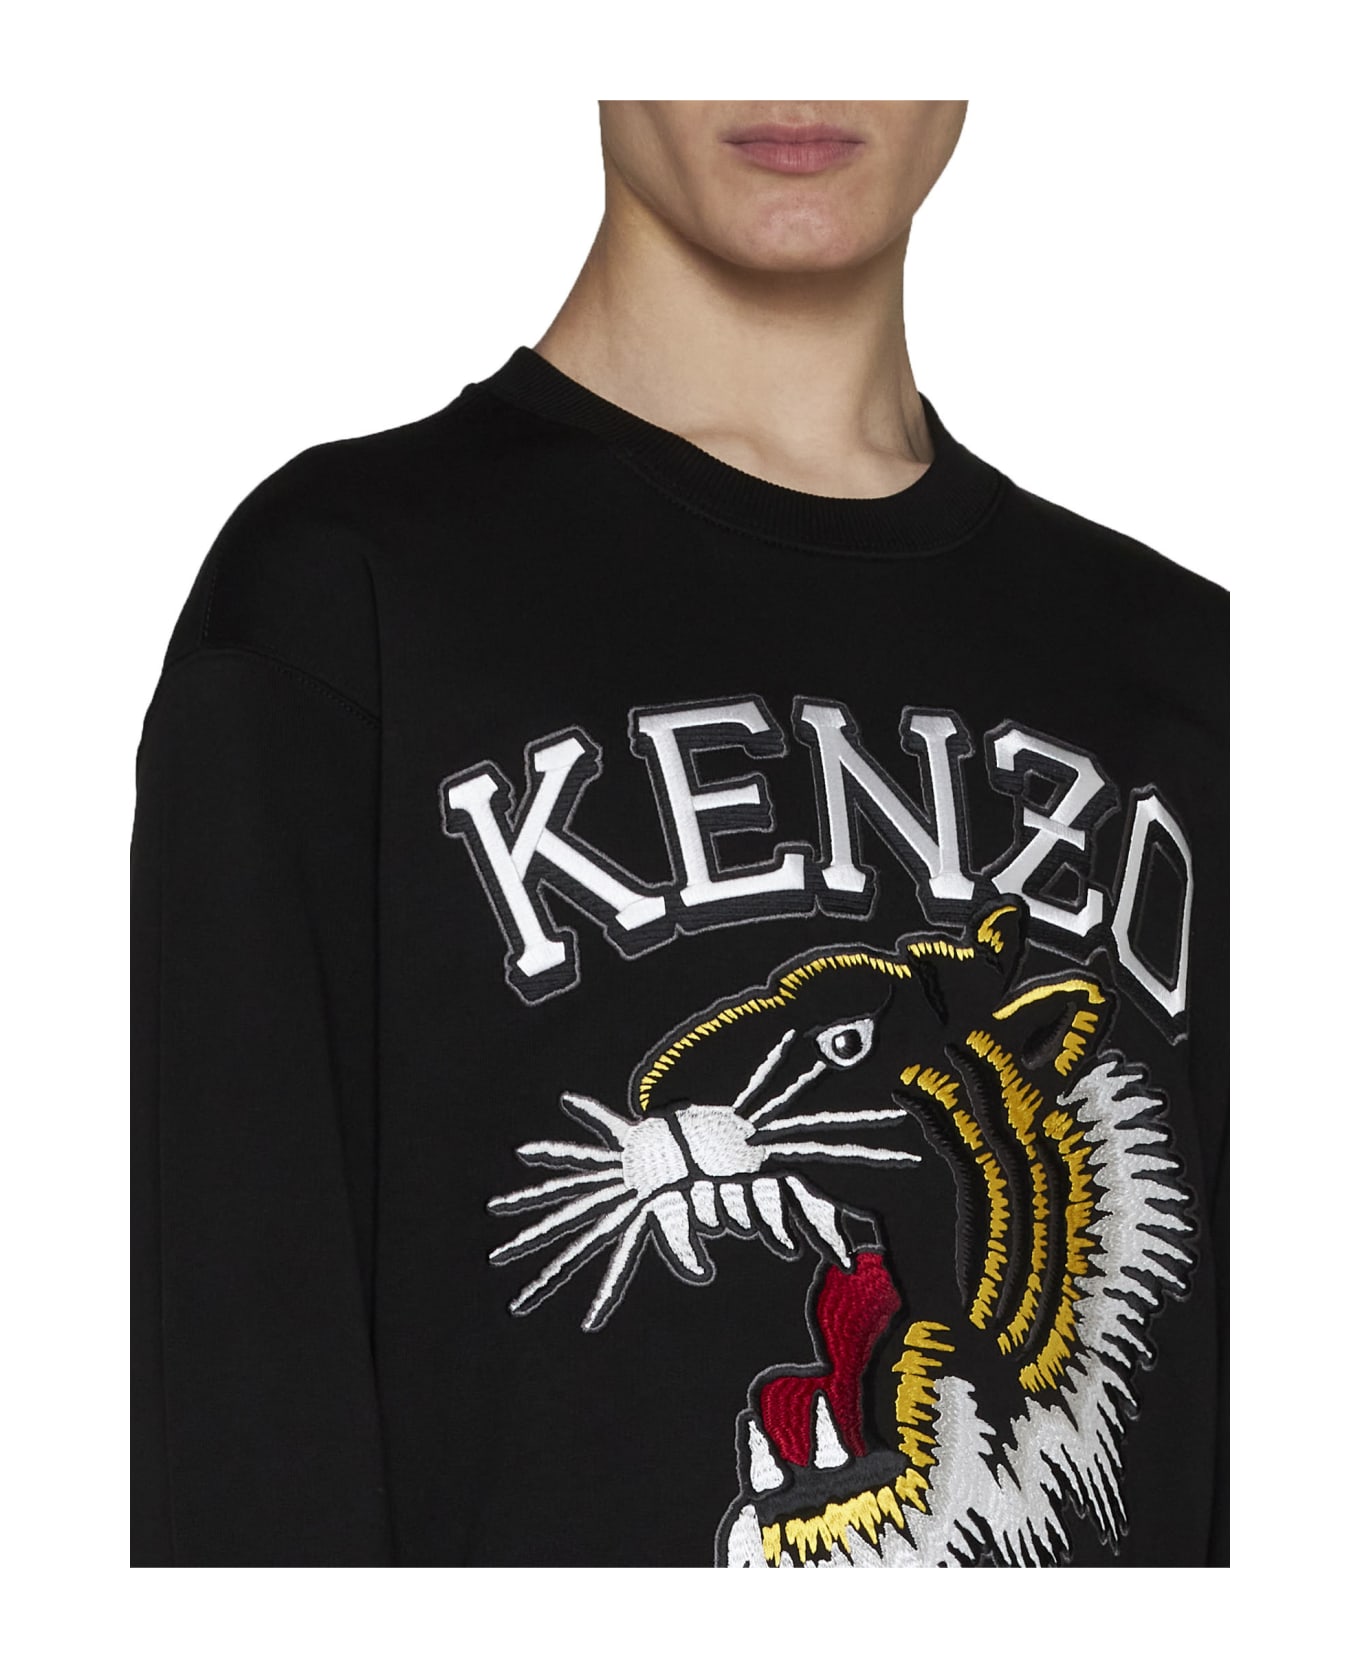 Kenzo Tiger Varsity Classic Sweatshirt - Black